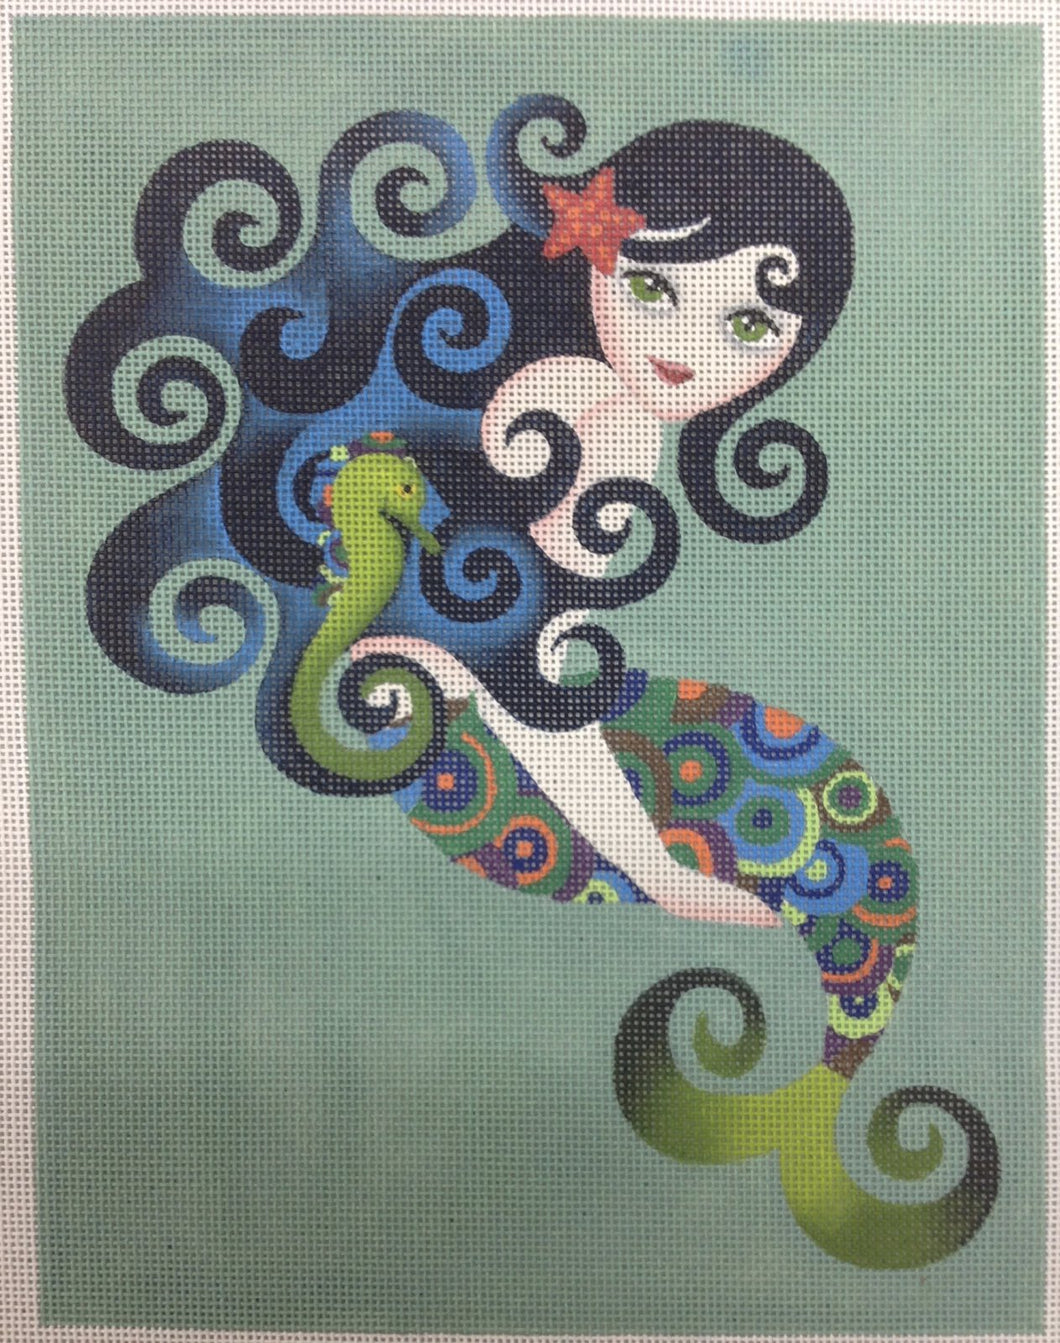 aquamarine mermaid with stitch guide